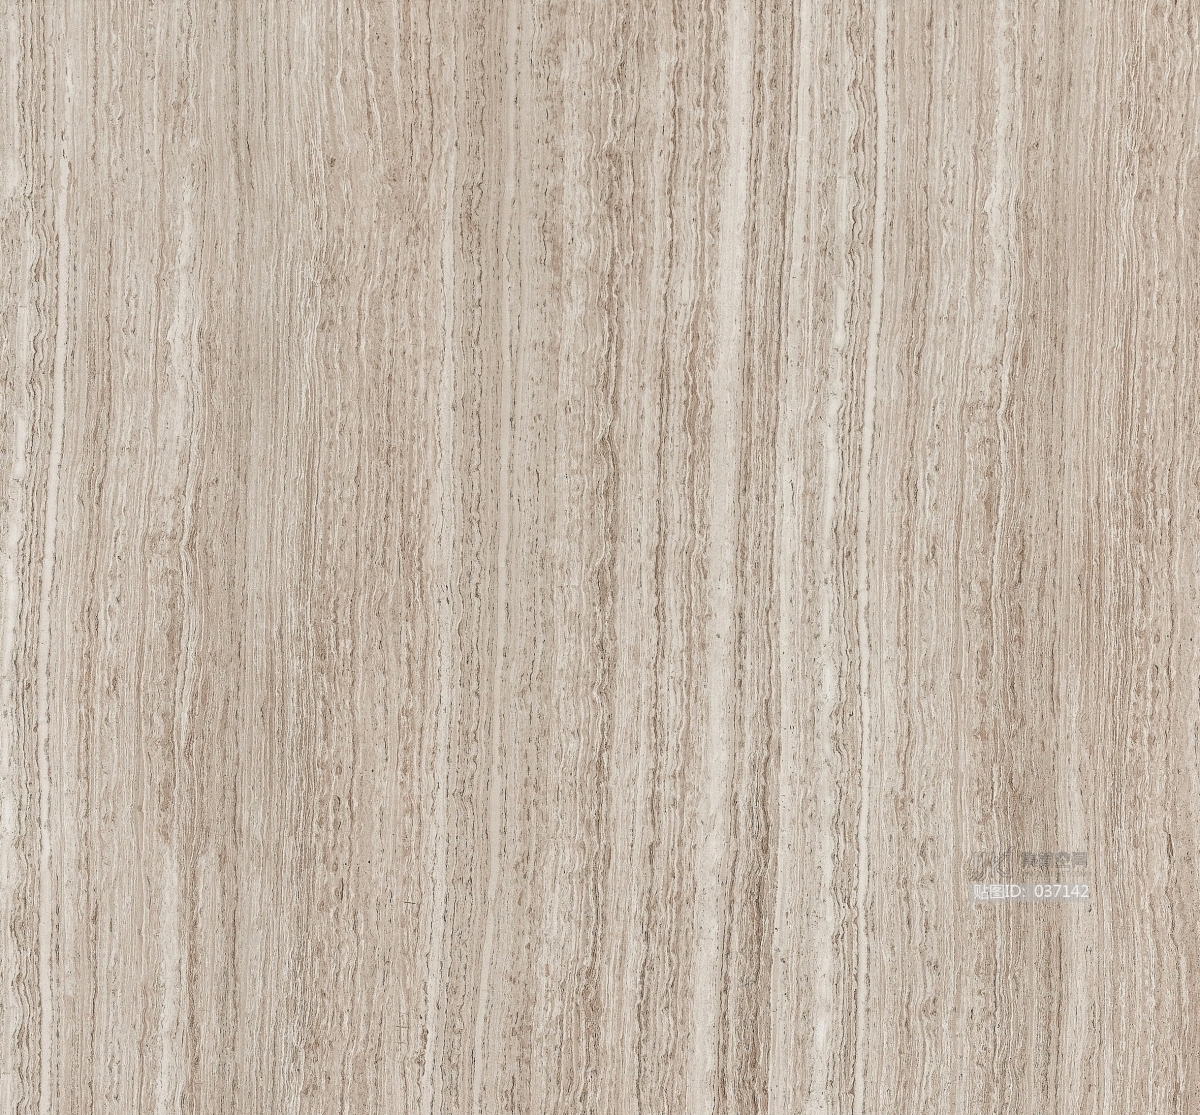 A15075052Q_木纹砖-现代仿古砖-瓷木砖品牌_佛山悦思创陶瓷KT瓷砖厂家品牌网